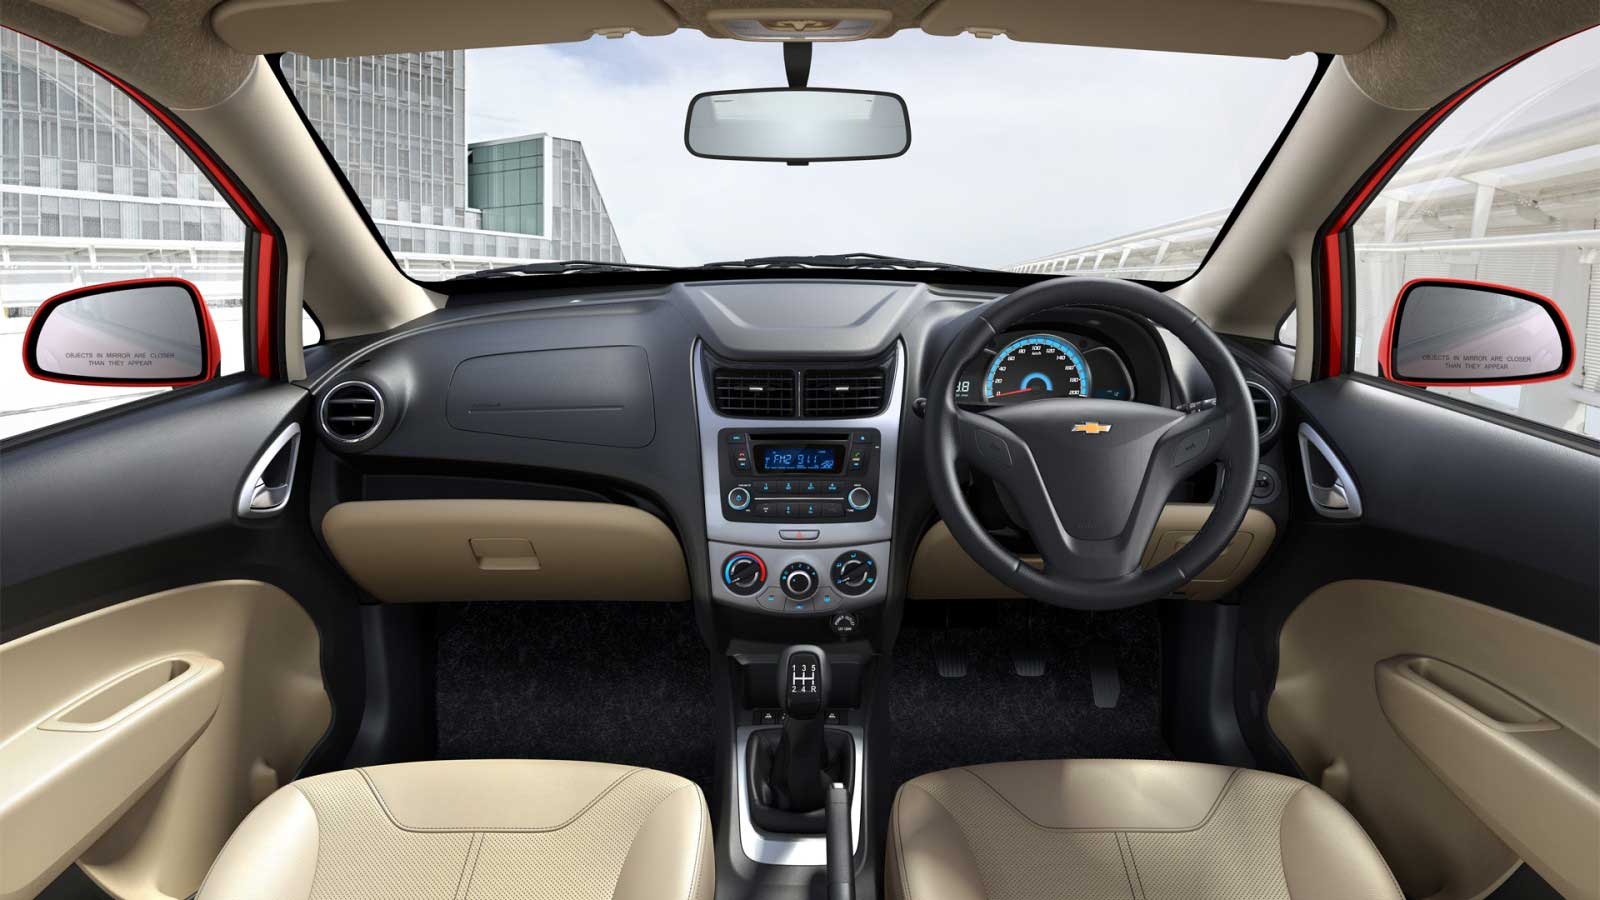 Chevrolet Sail Hatchback 1.2 LS ABS Interior front view